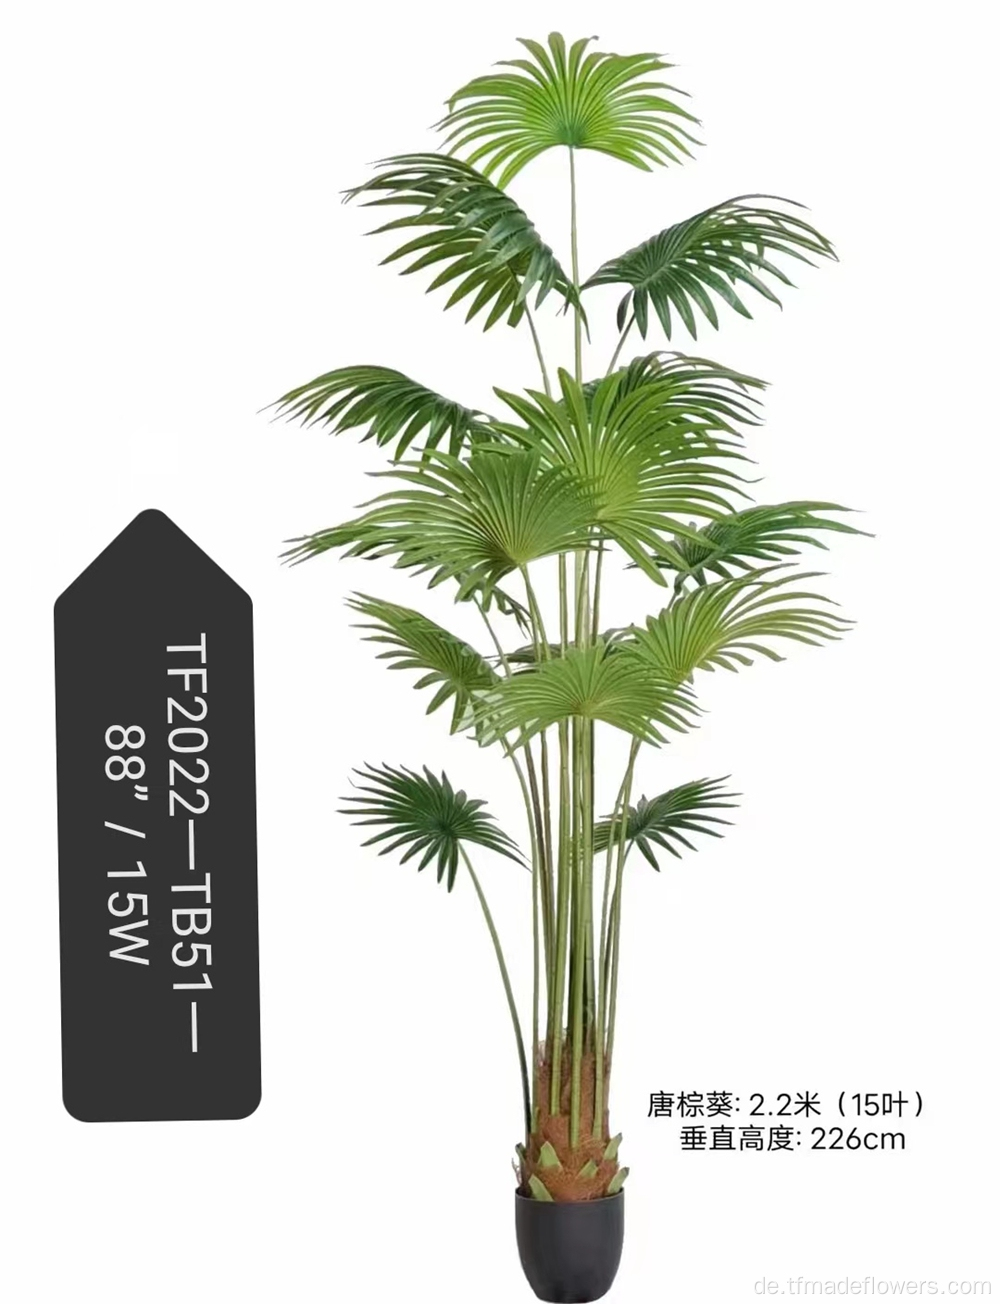 Simulationspflanze Tang Palm Sonnenblume zur Innenausstattung